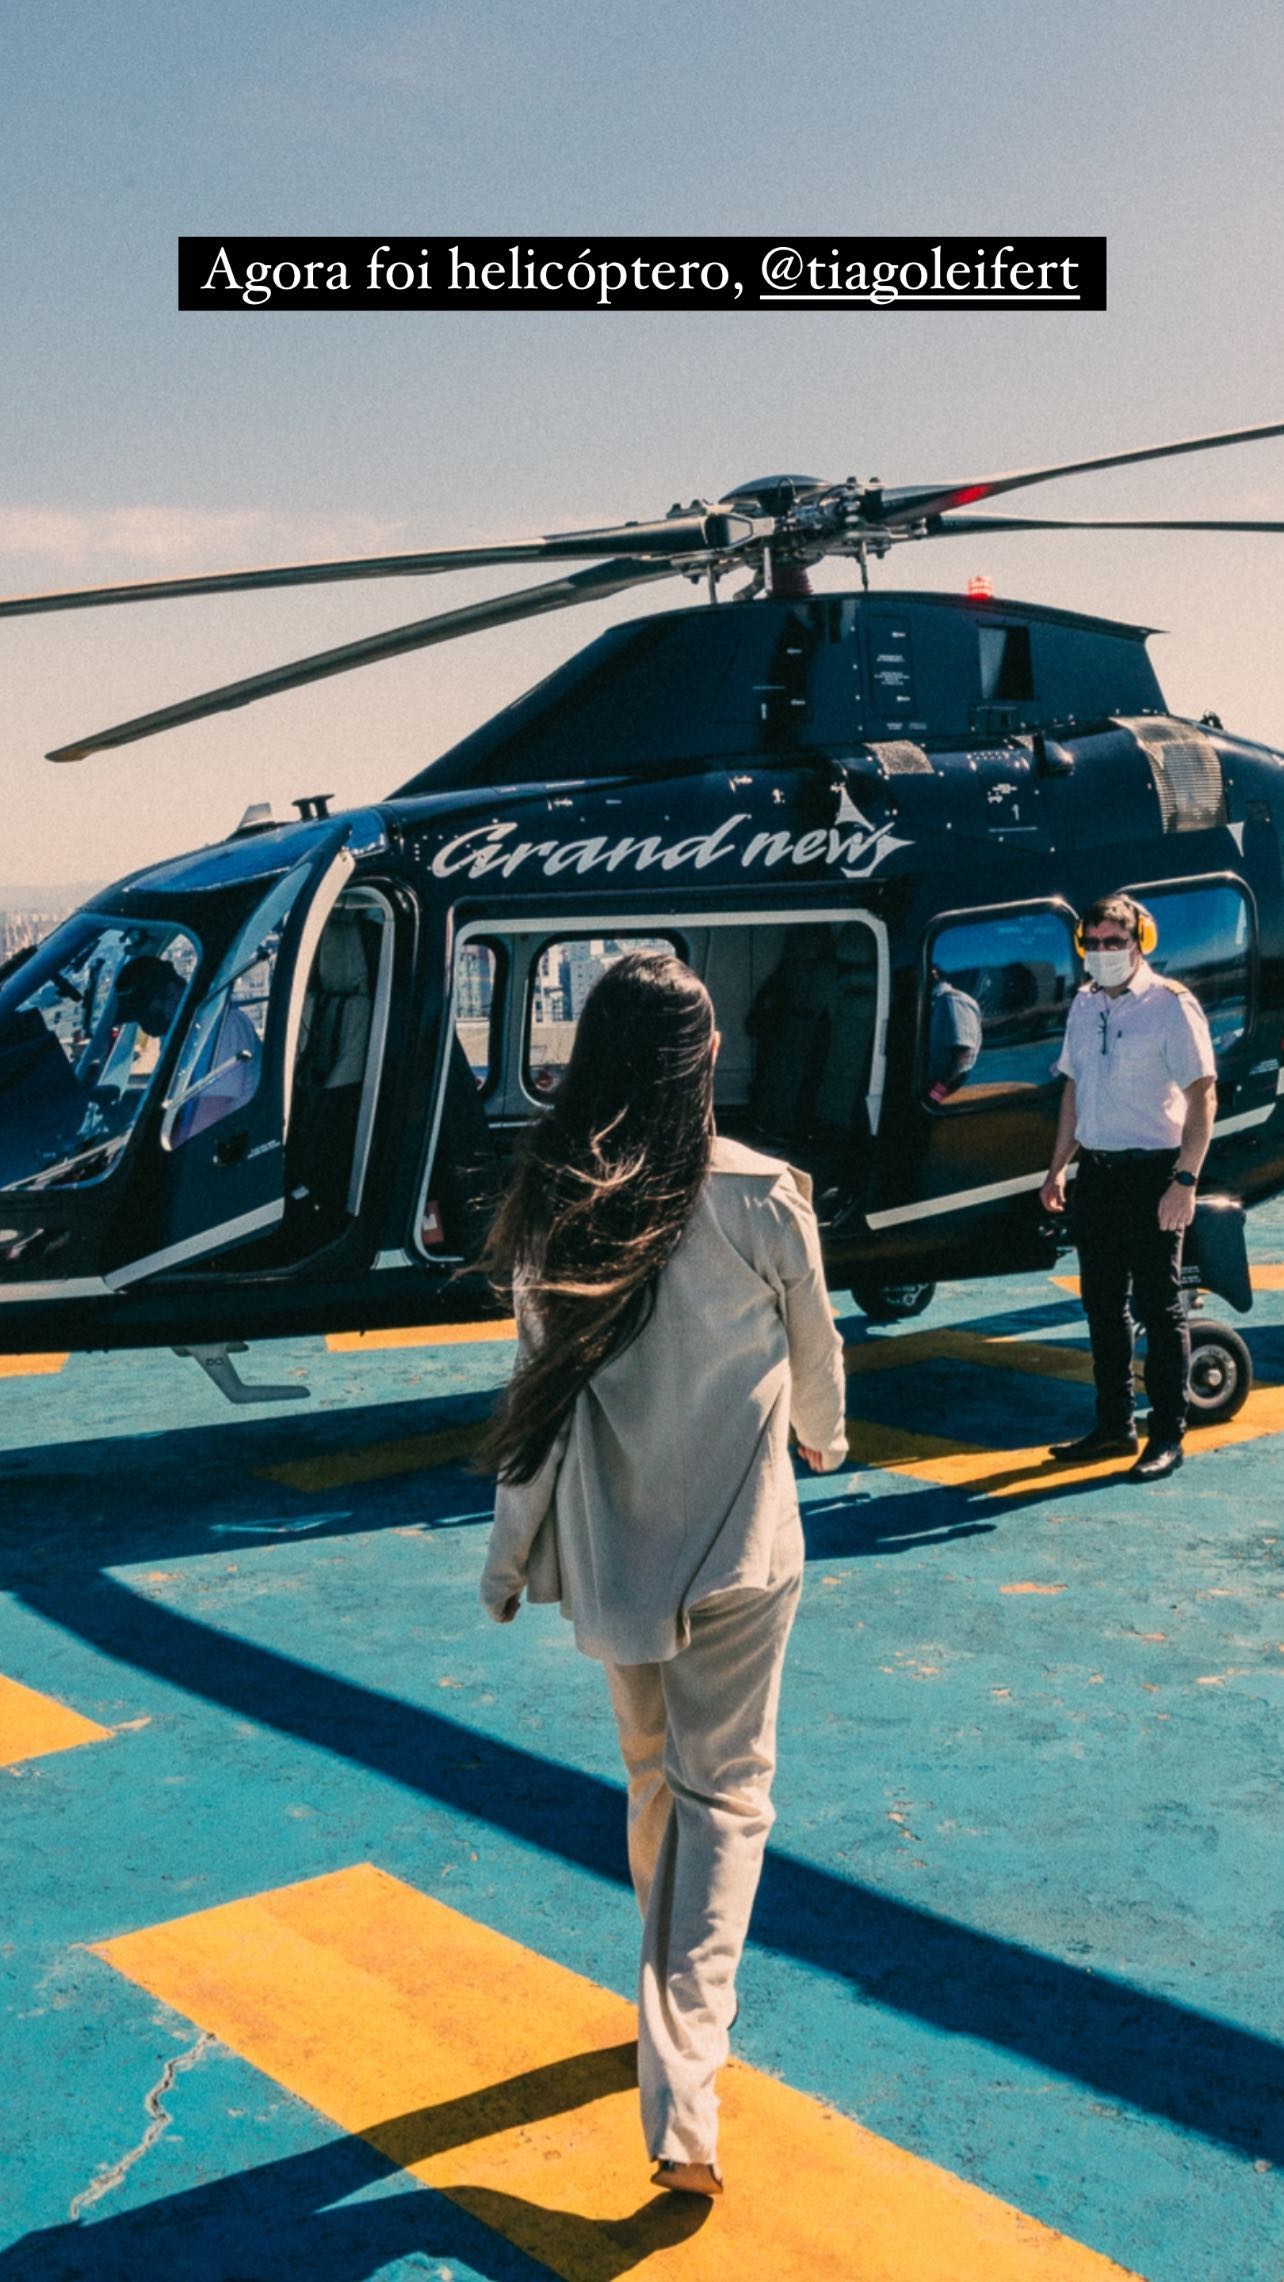 Juliette passeia de helicóptero (Foto: Reprodução/Instagram)